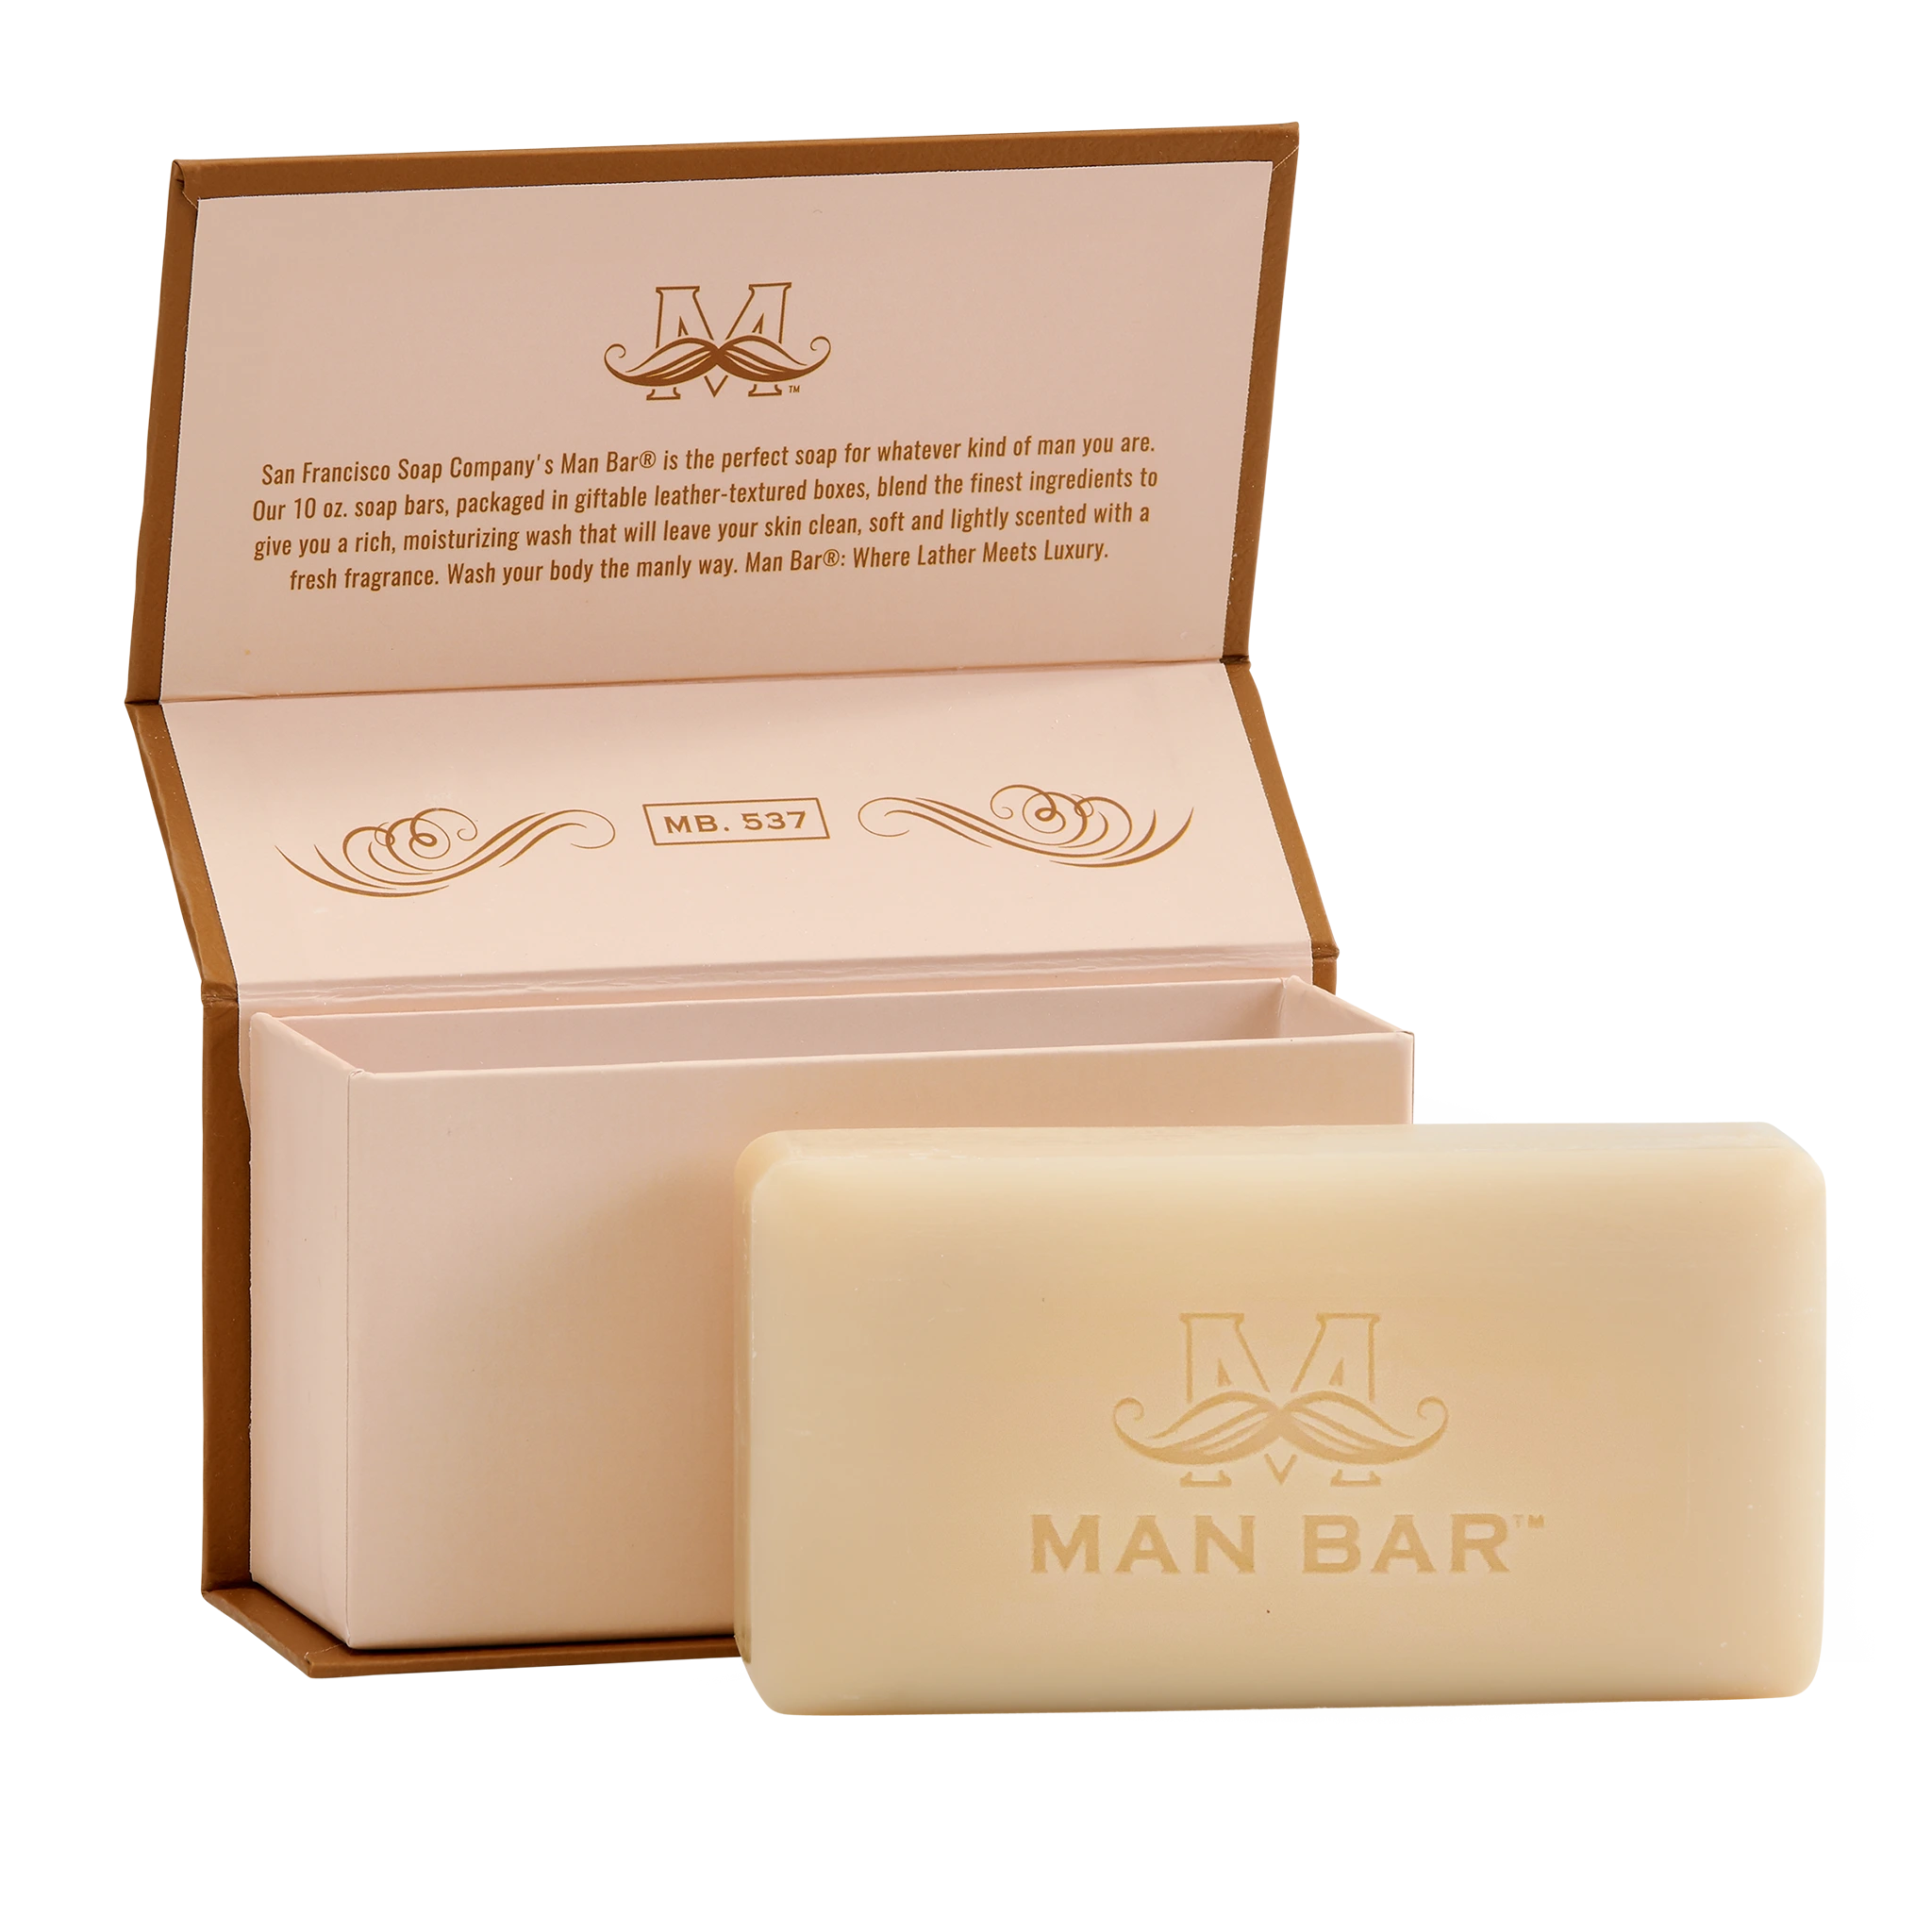 San Francisco Soap Co. Man Bar Moisture Rich Spiced Tobacco Soap, Gifts